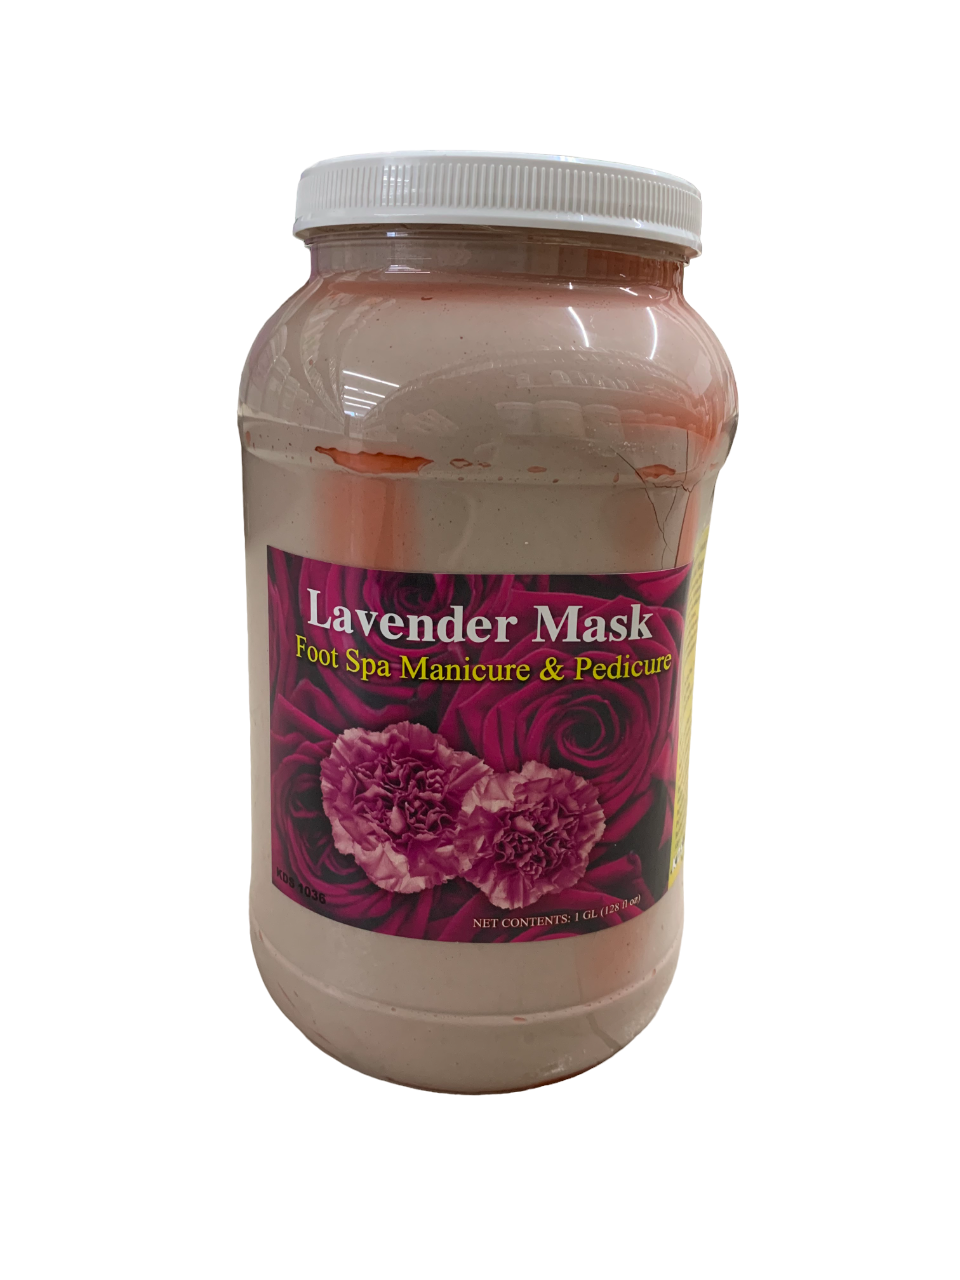 KDS Foot Spa Medicure and Pedicure Lavender Mask